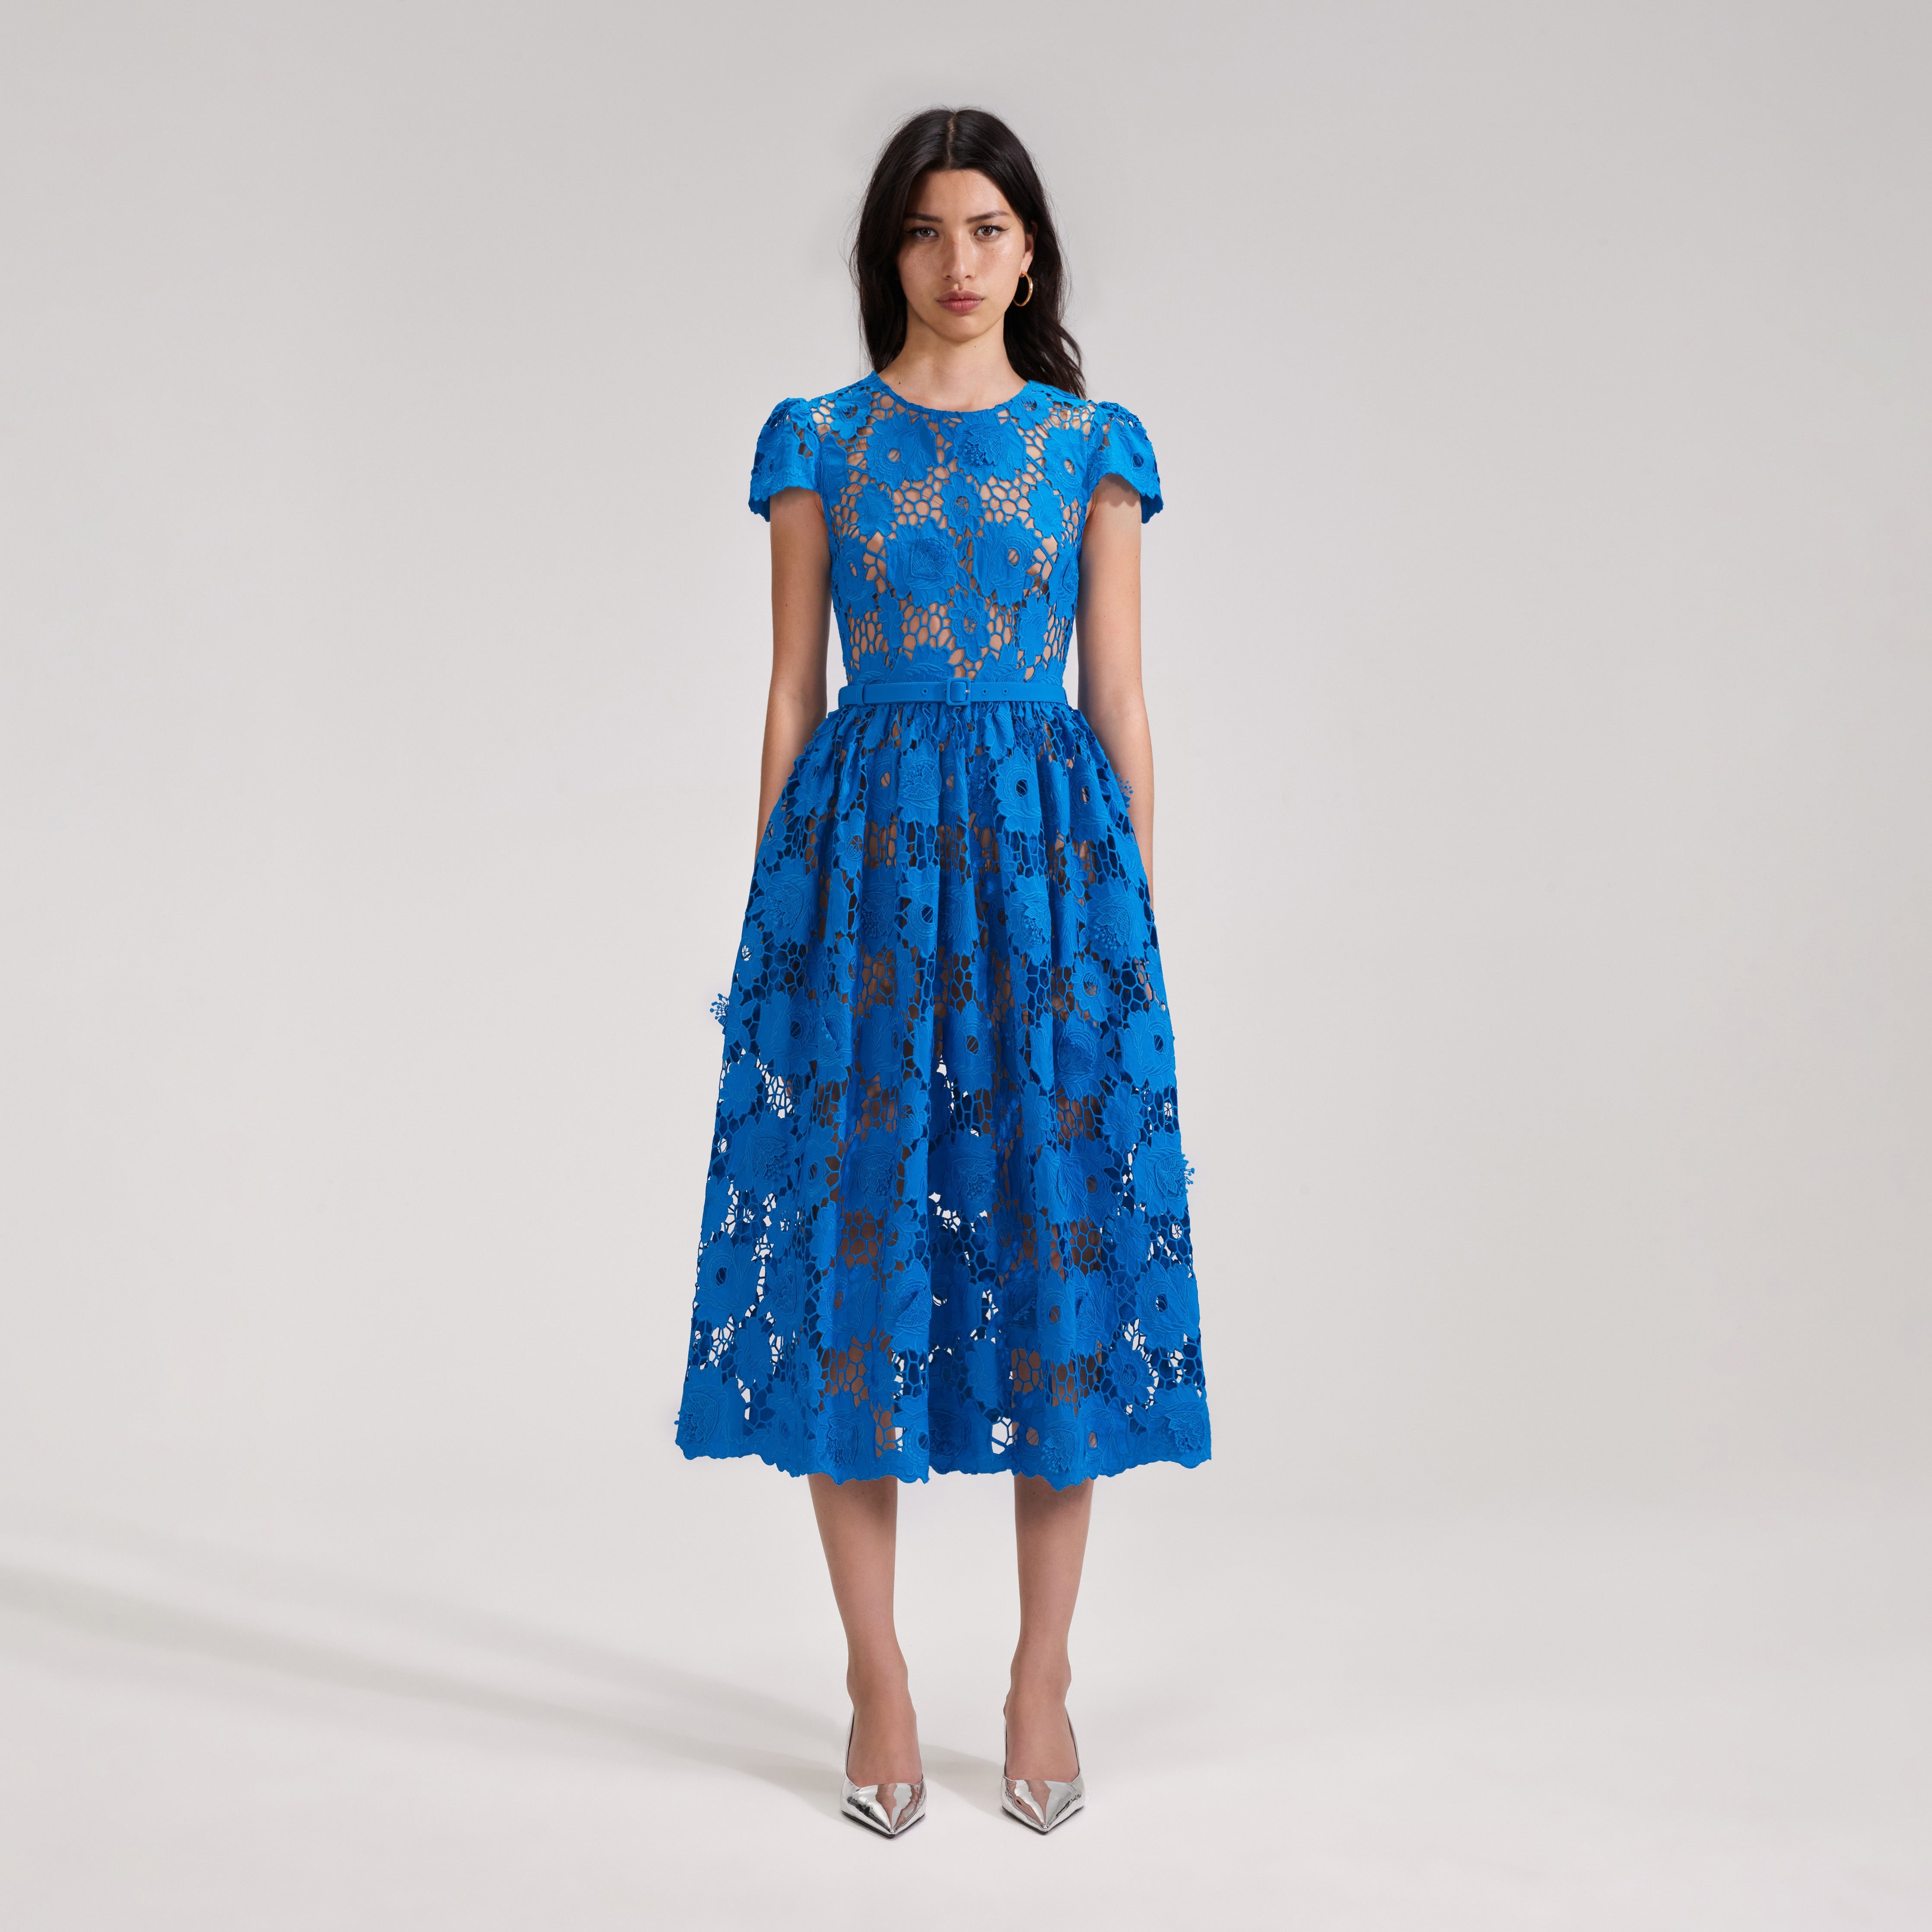 HEYKIDOO Designer Frock Latest Girls Party Dress - Peach & Blue